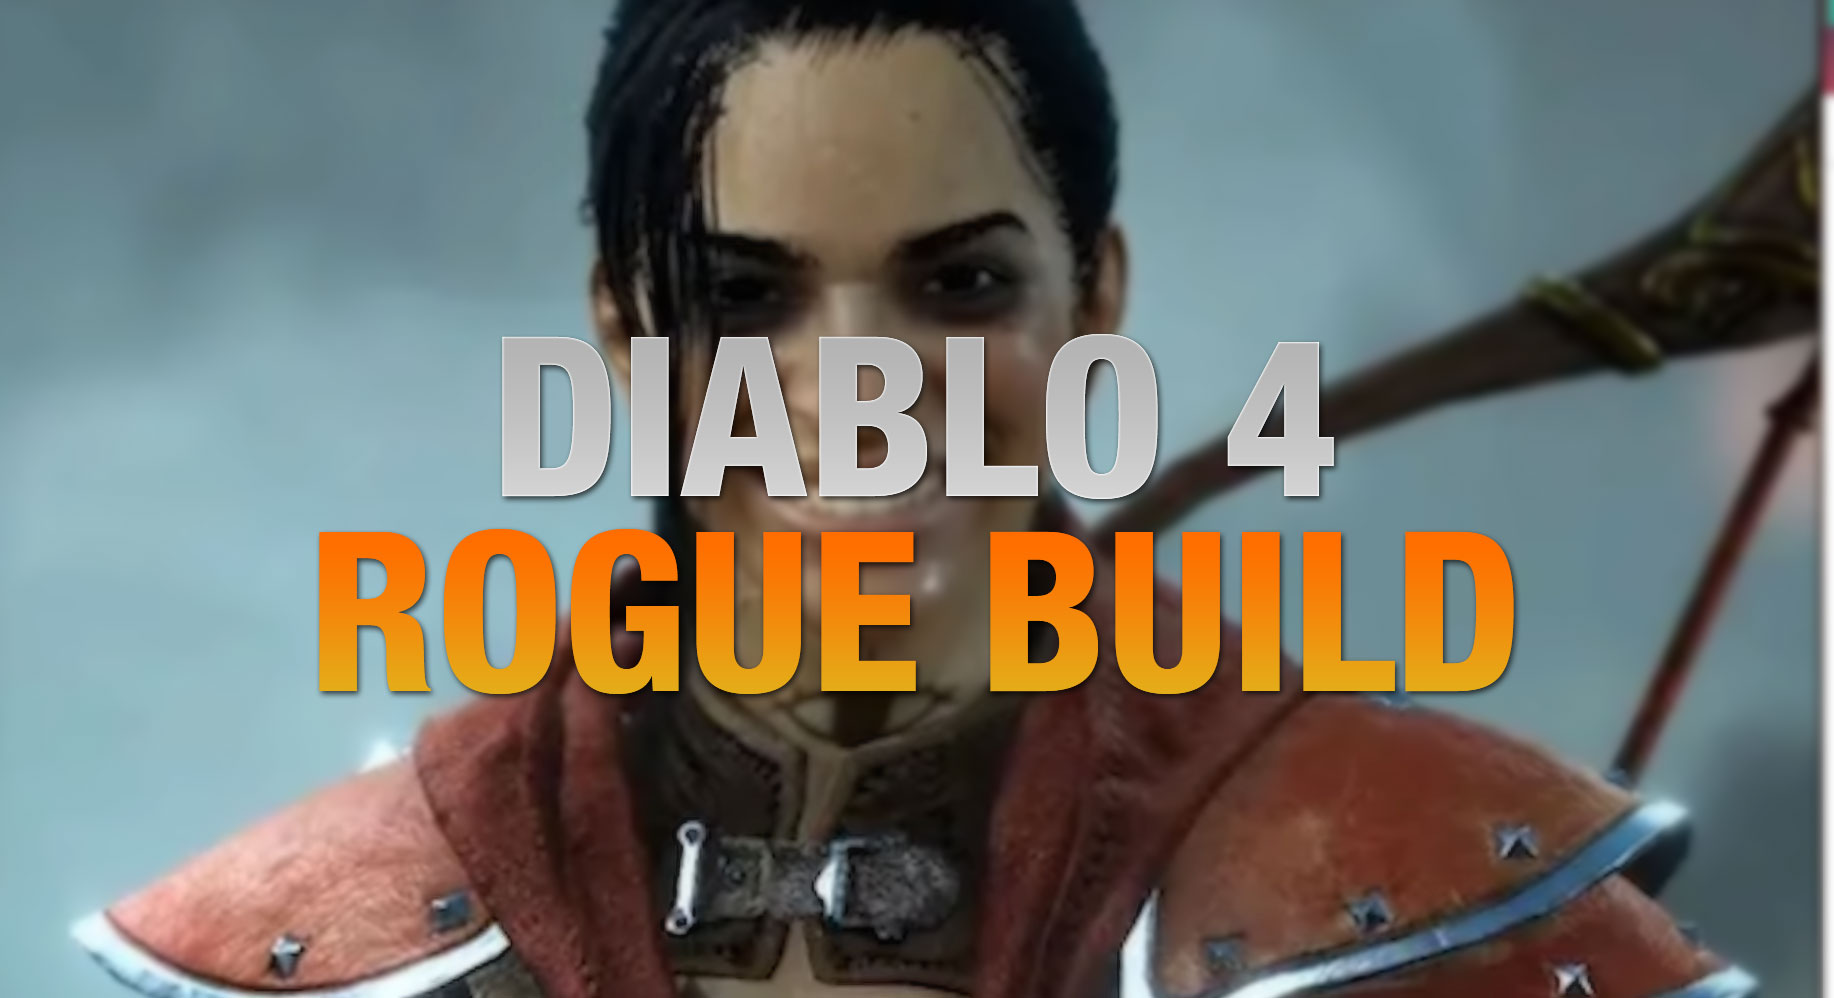 Diablo 4 Best Rogue Build Guide (Strengths, Skills, Glass Mechanics, Guilds, Gameplay Tips)